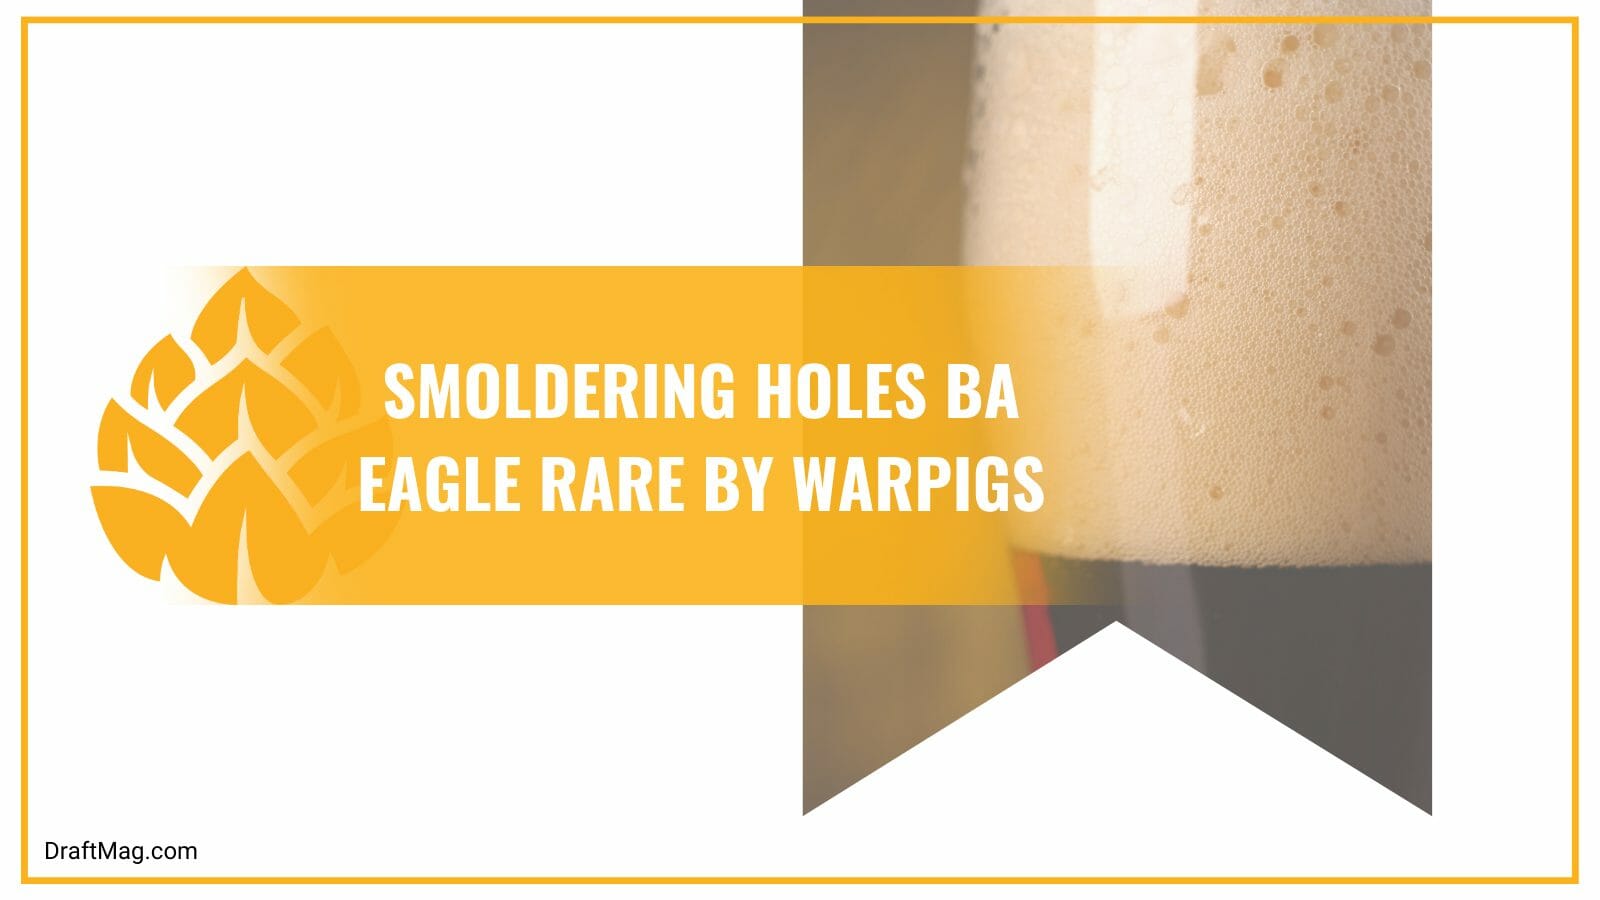 Smoldering holes ba eagle rare